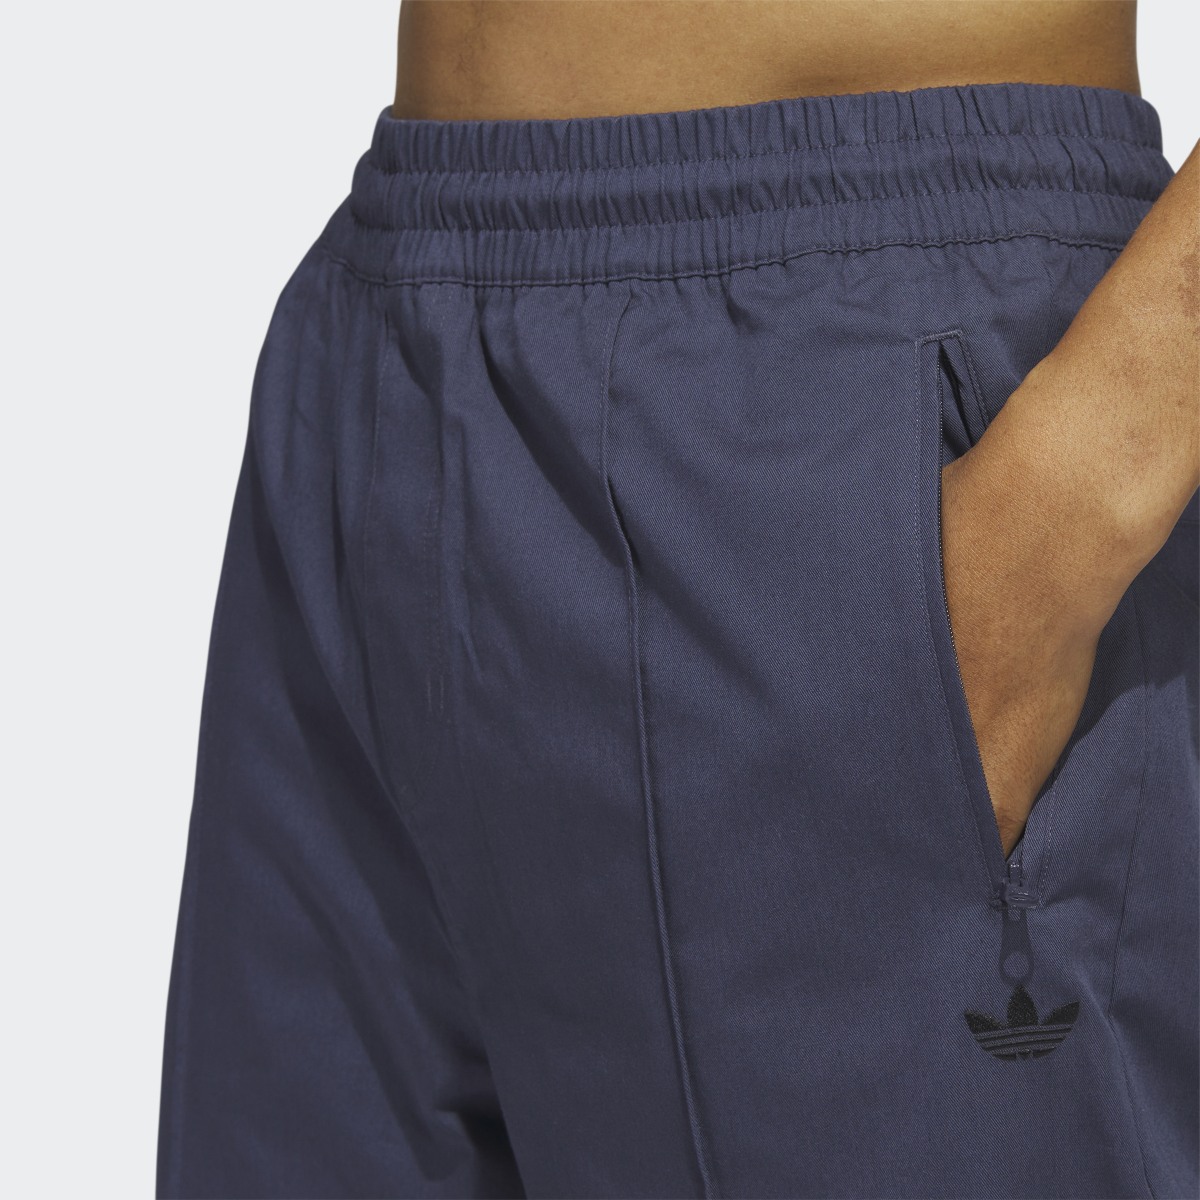 Adidas Pintuck Pants (Gender Neutral). 6